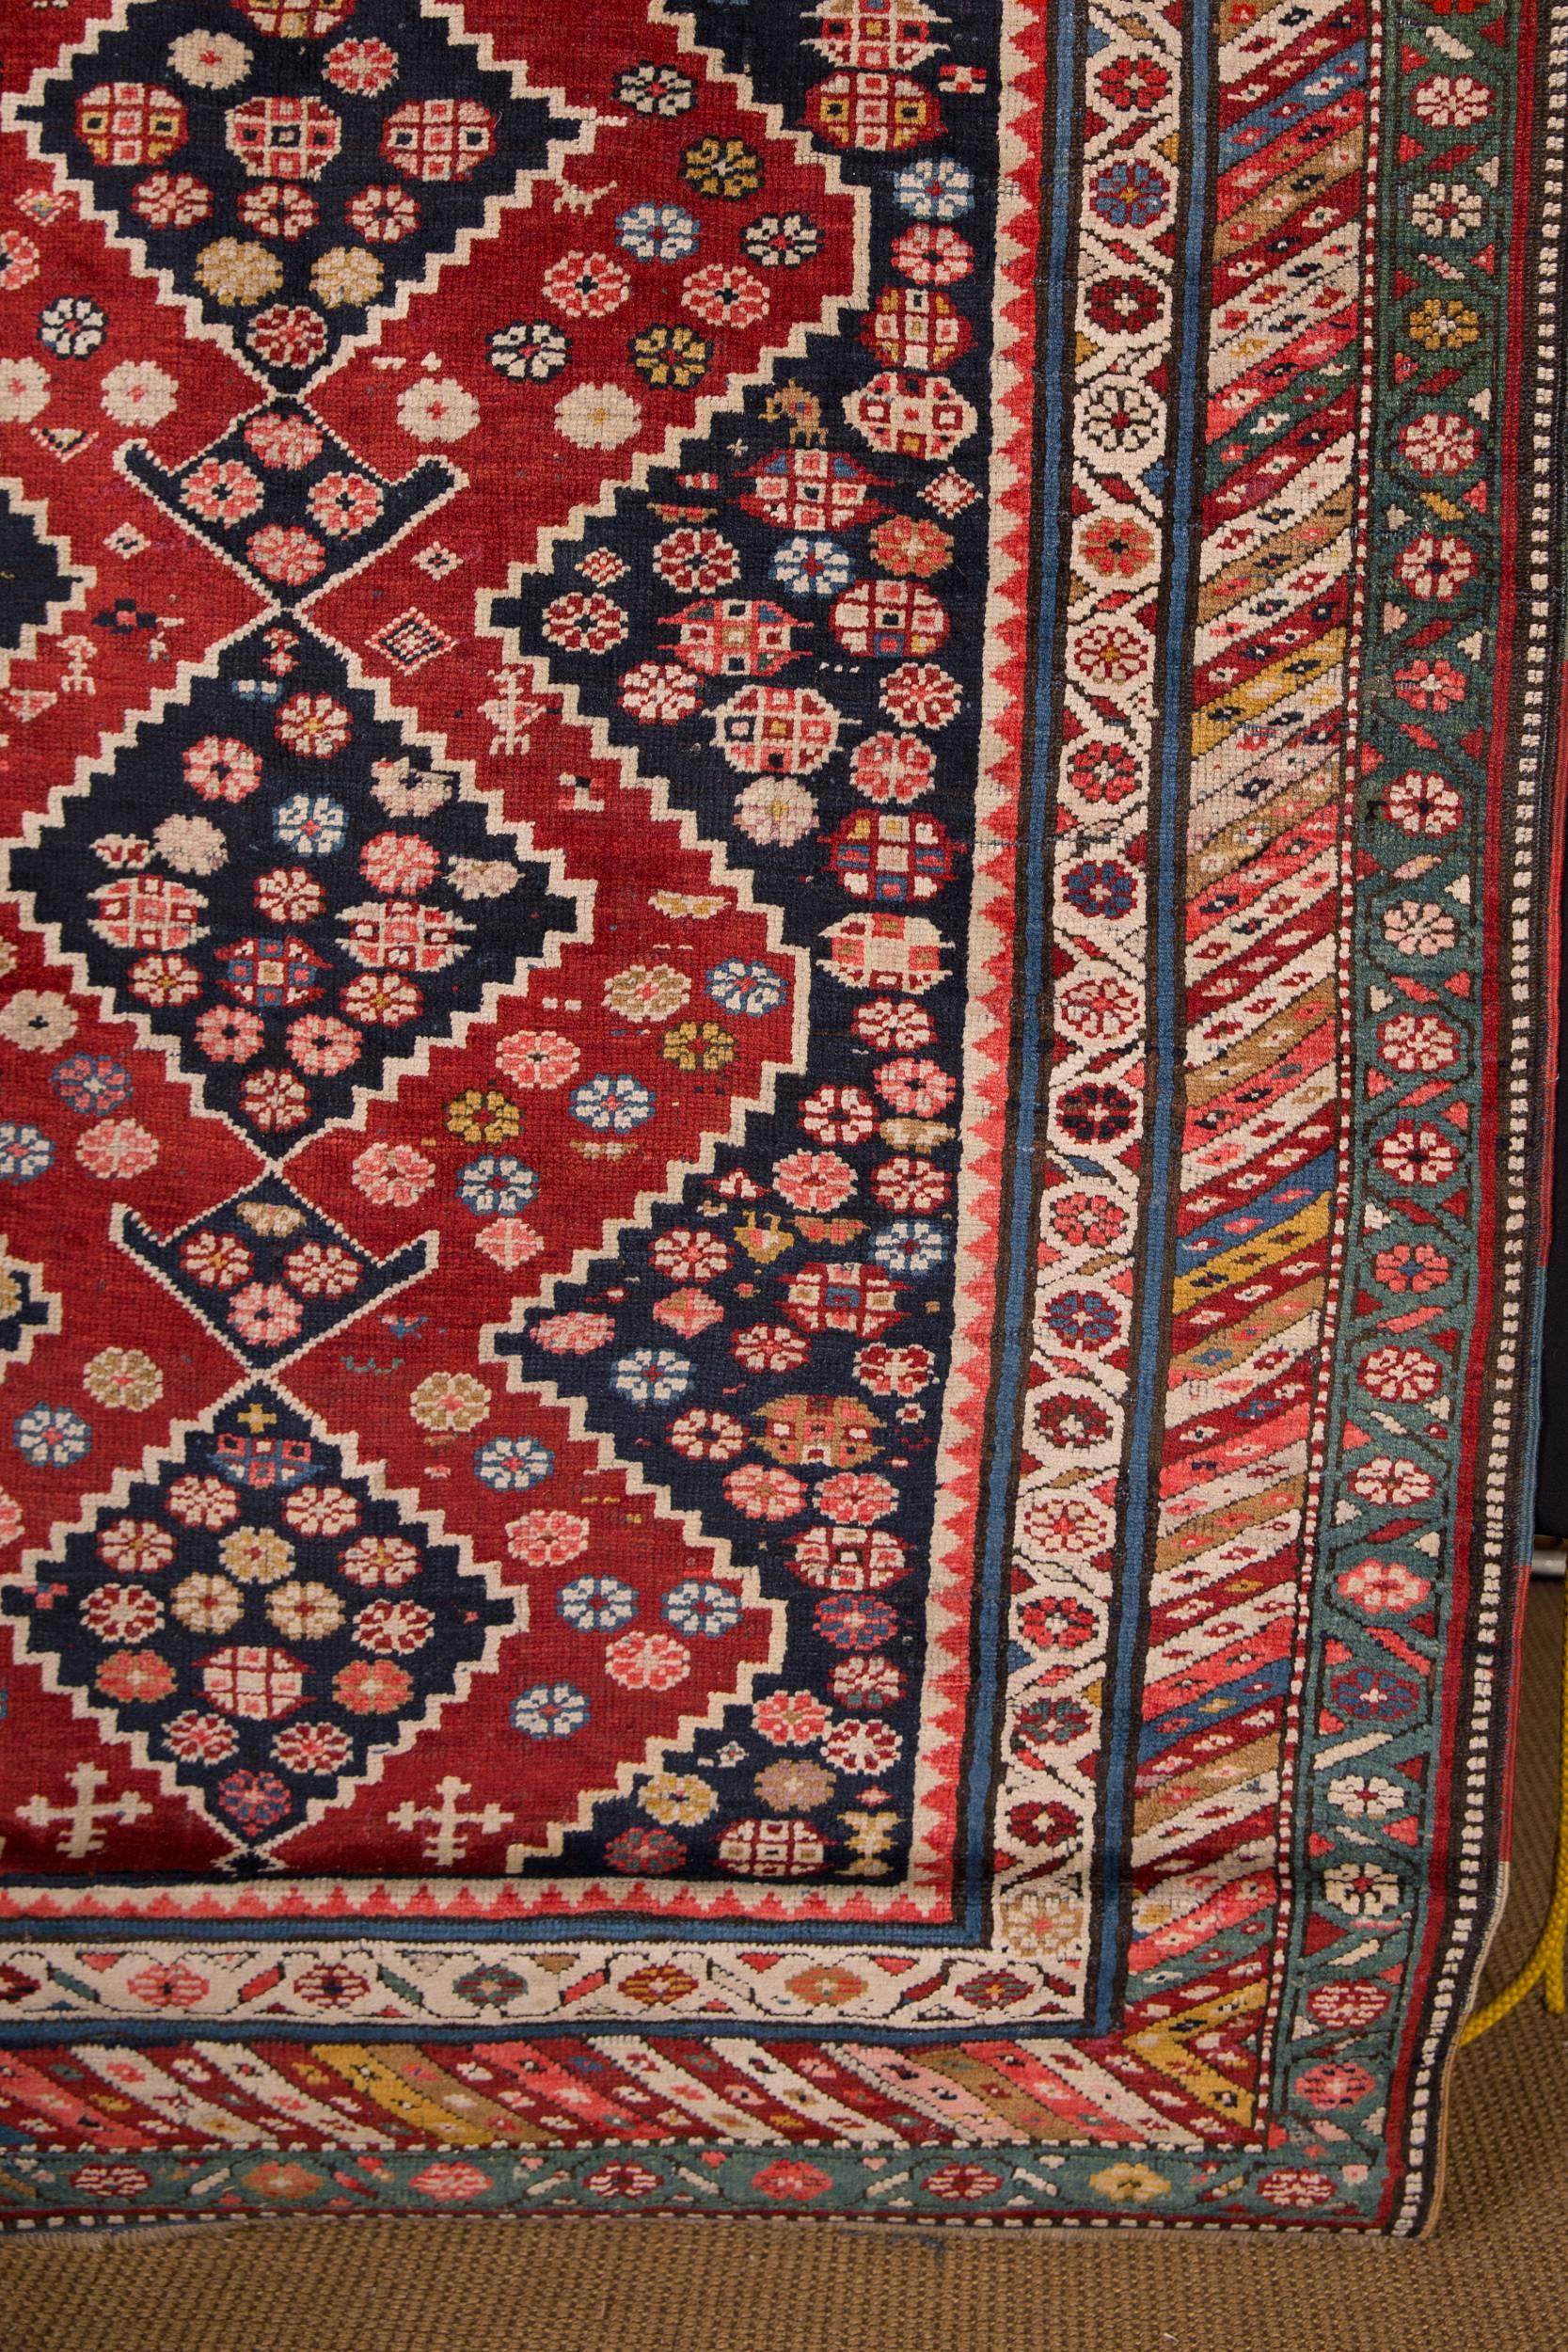 Hand-Knotted 19th Century Antique Kazak Carpet Rug